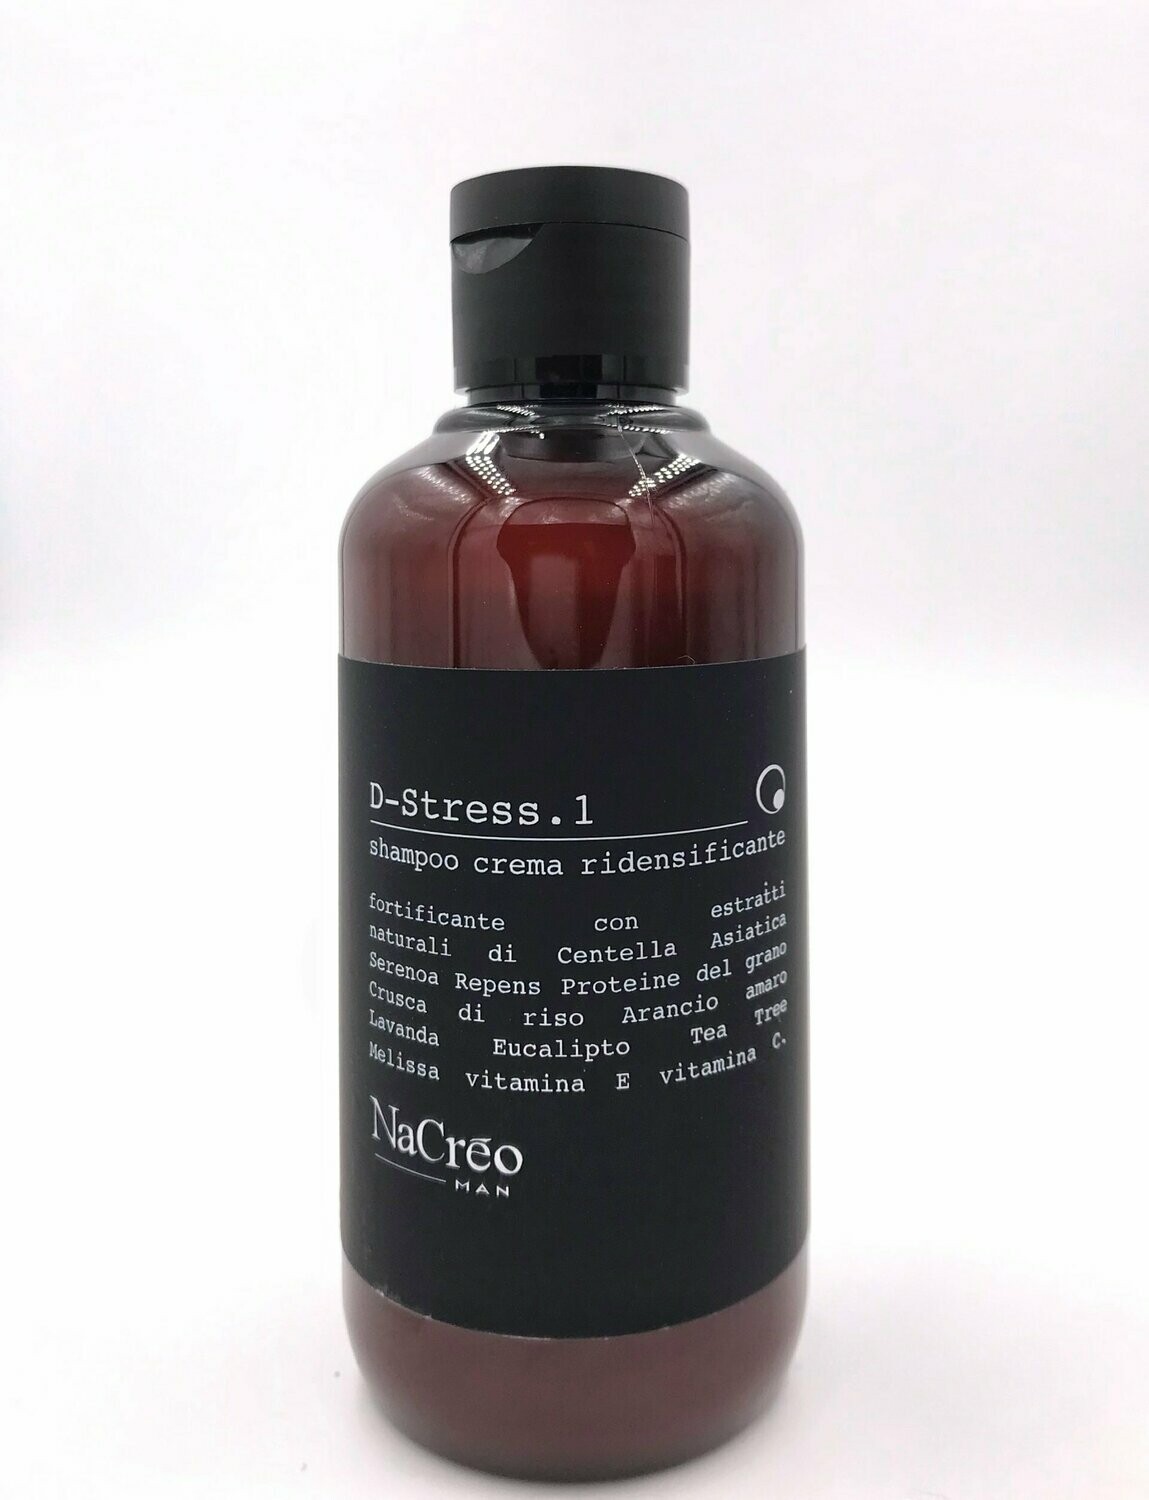 D-Stress shampoo crema